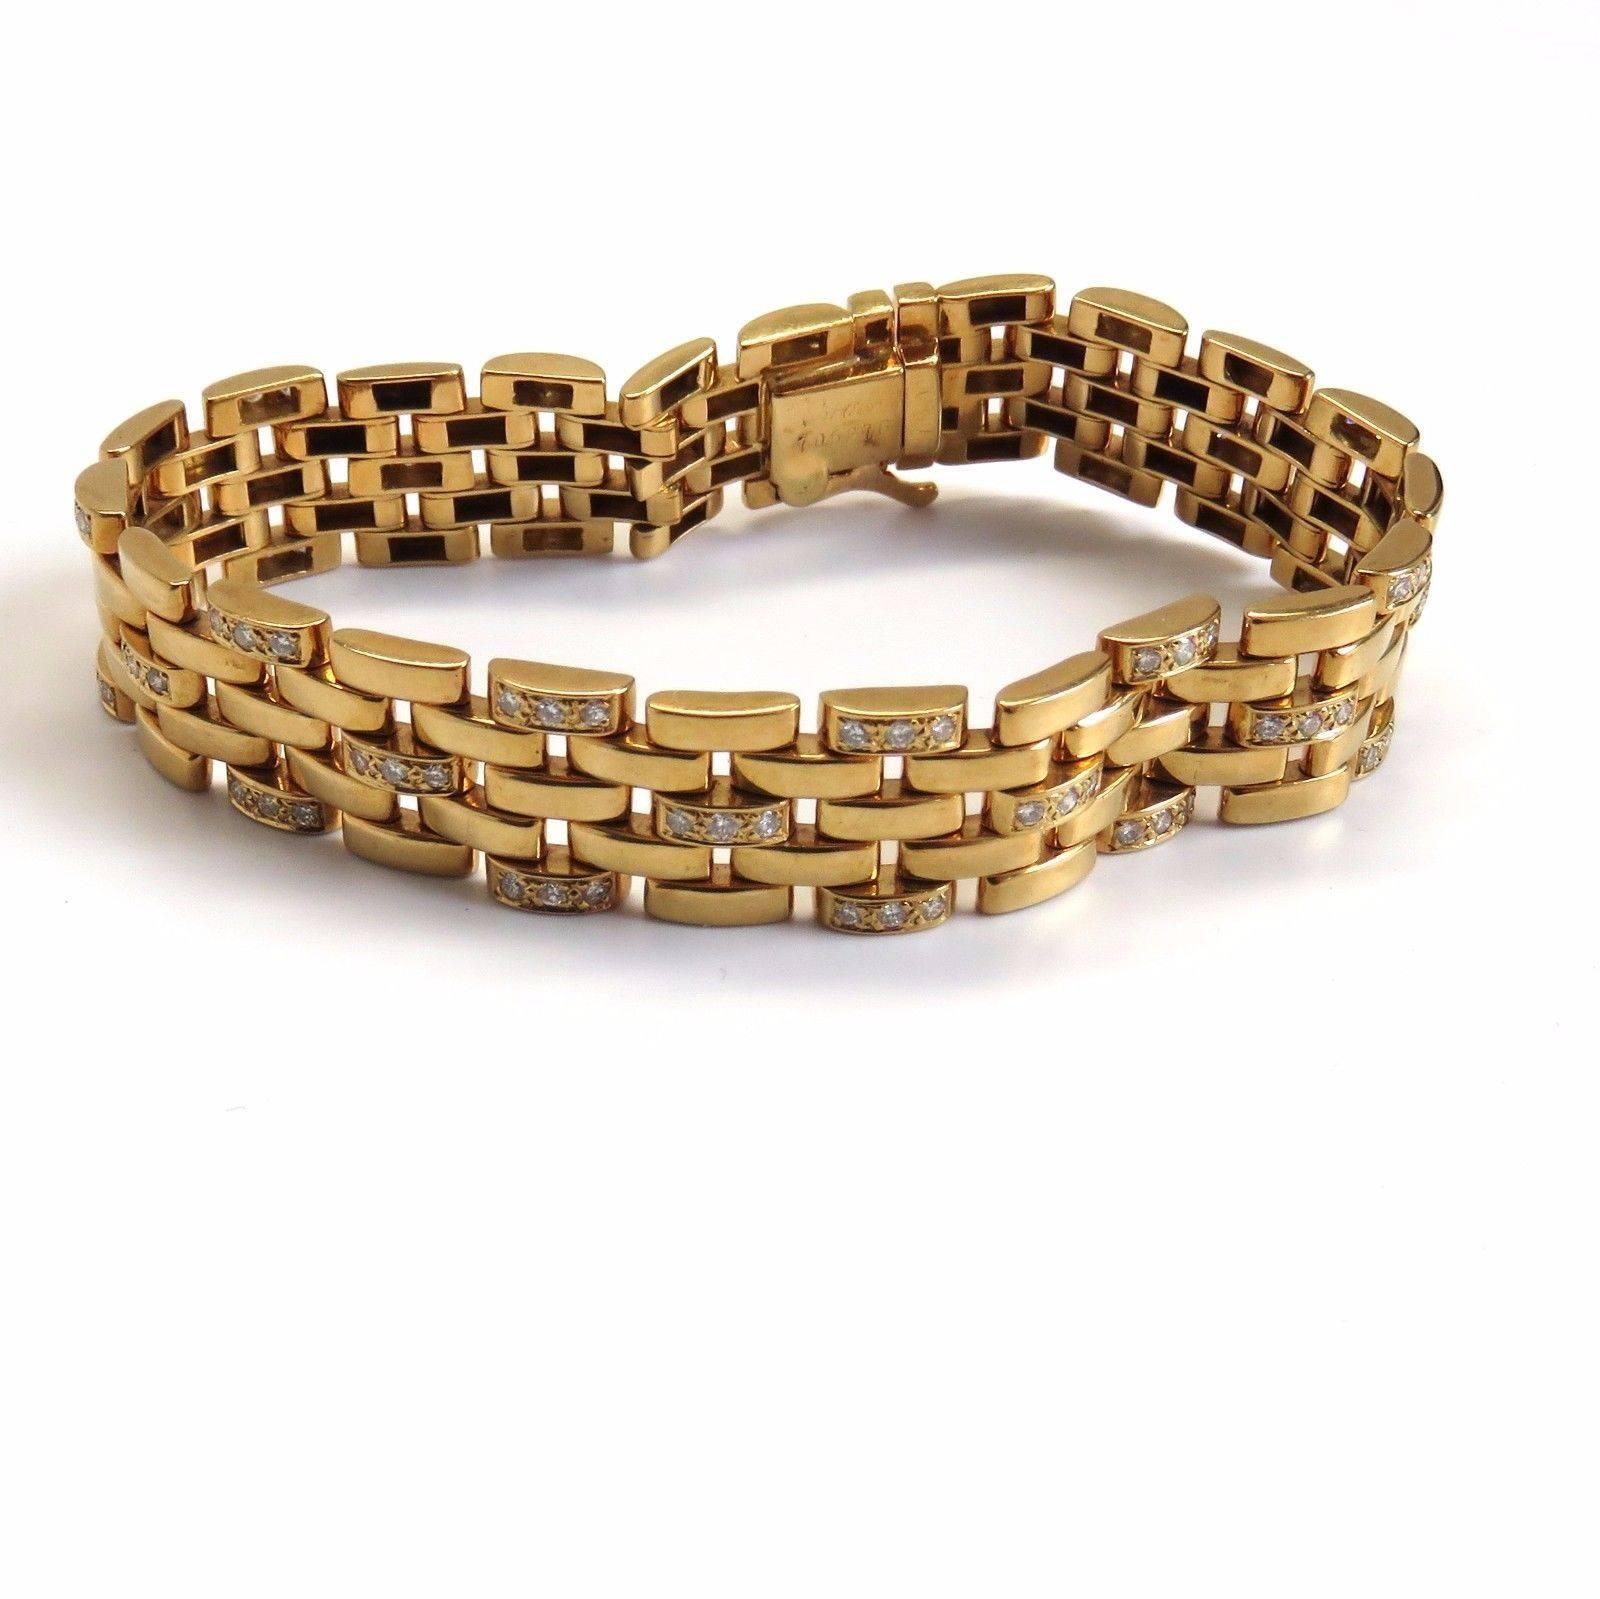 An 18k yellow gold bracelet set with approximately 1.50ctw of G/VS diamonds.  The bracelet measures 7.25